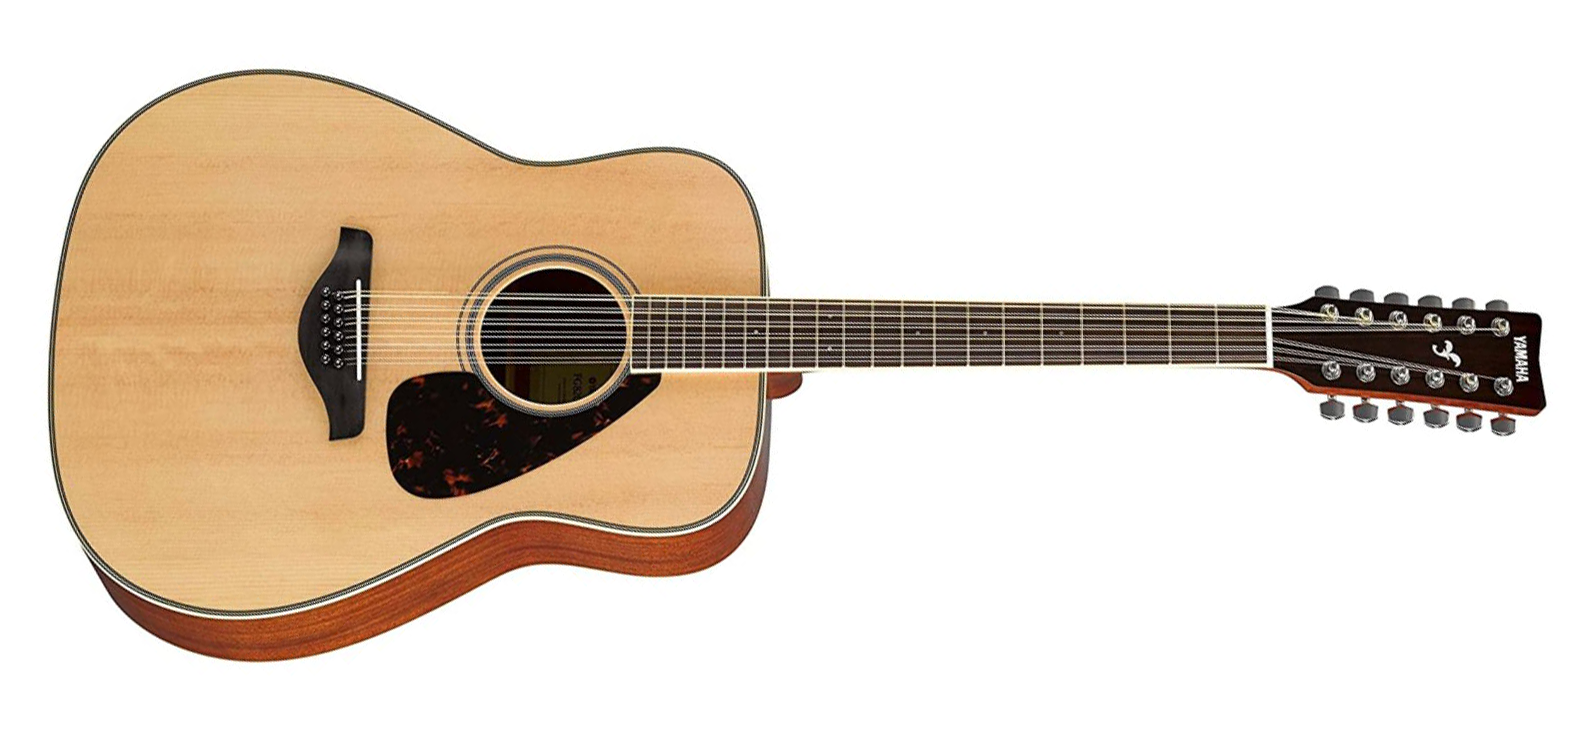 Yamaha FG820-12 FG Series Dreadnought 12-String RH Acoustic Guitar in Natural